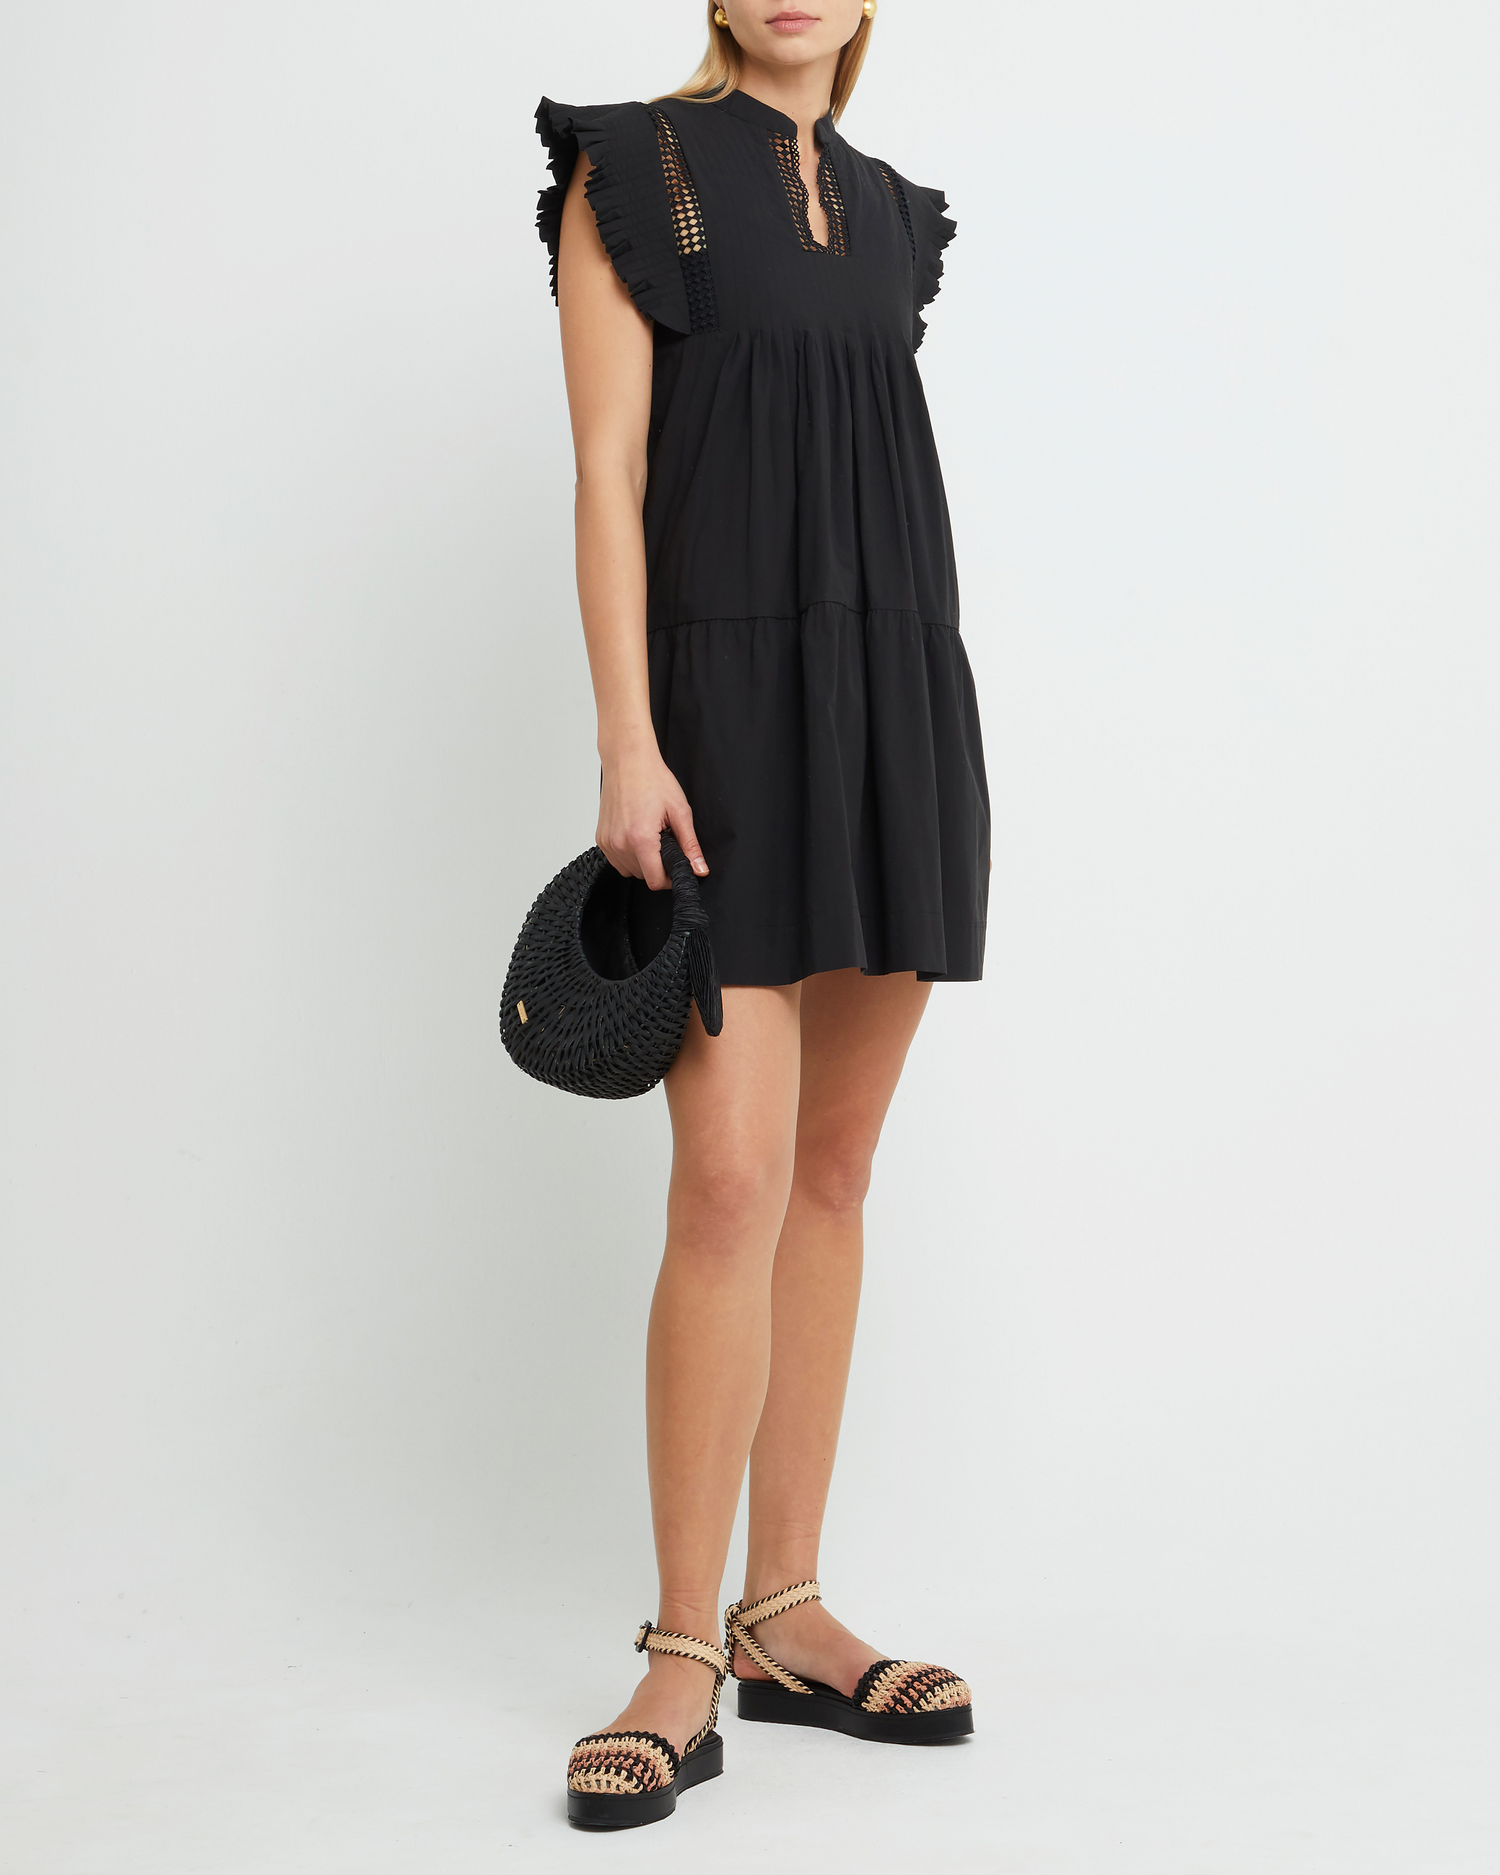 Fourth image of Callan Dress, a black mini dress, paneled, lace, ruffle sleeve, high neckline